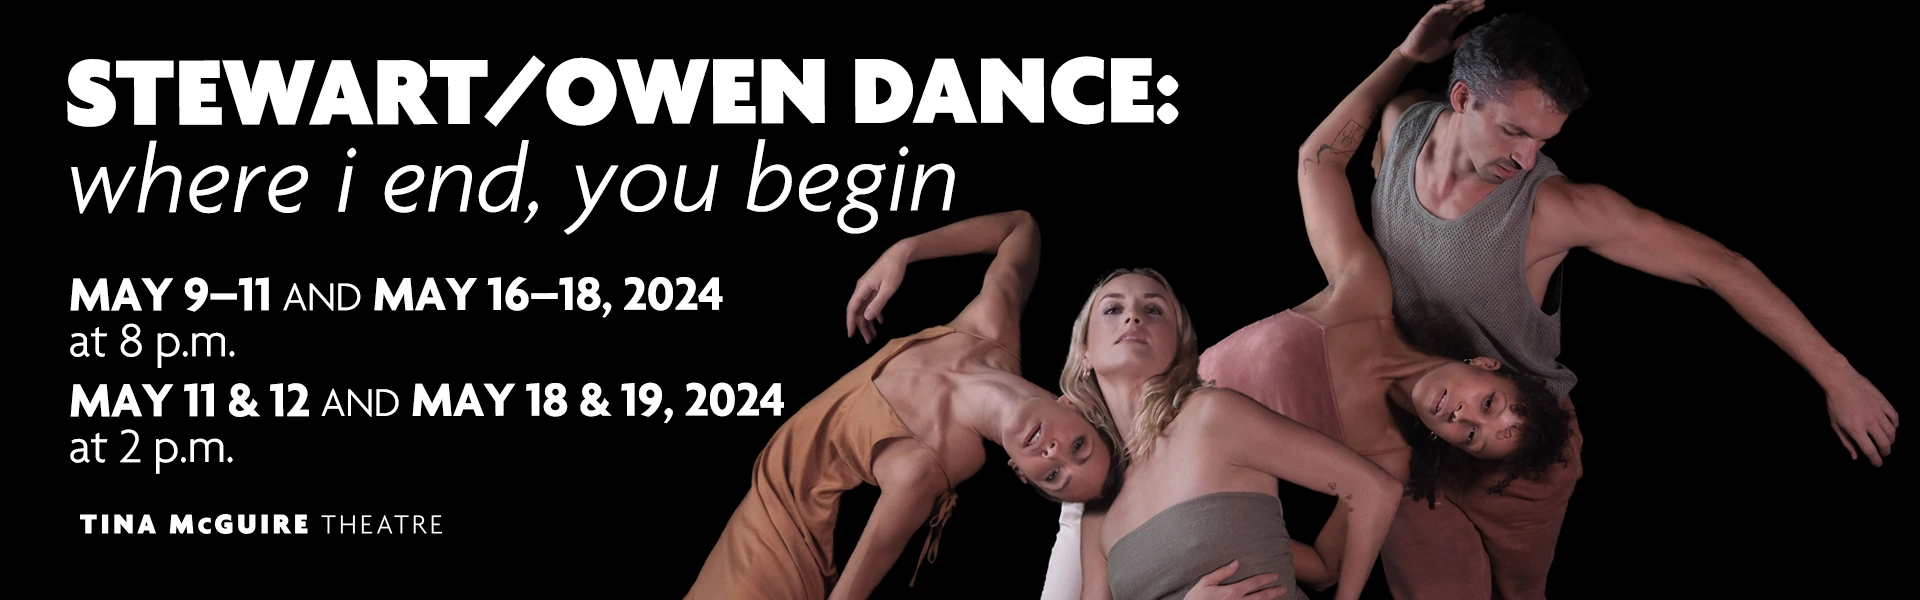 Stewart/Owen Dance: where i end, you begin. May 9-19.